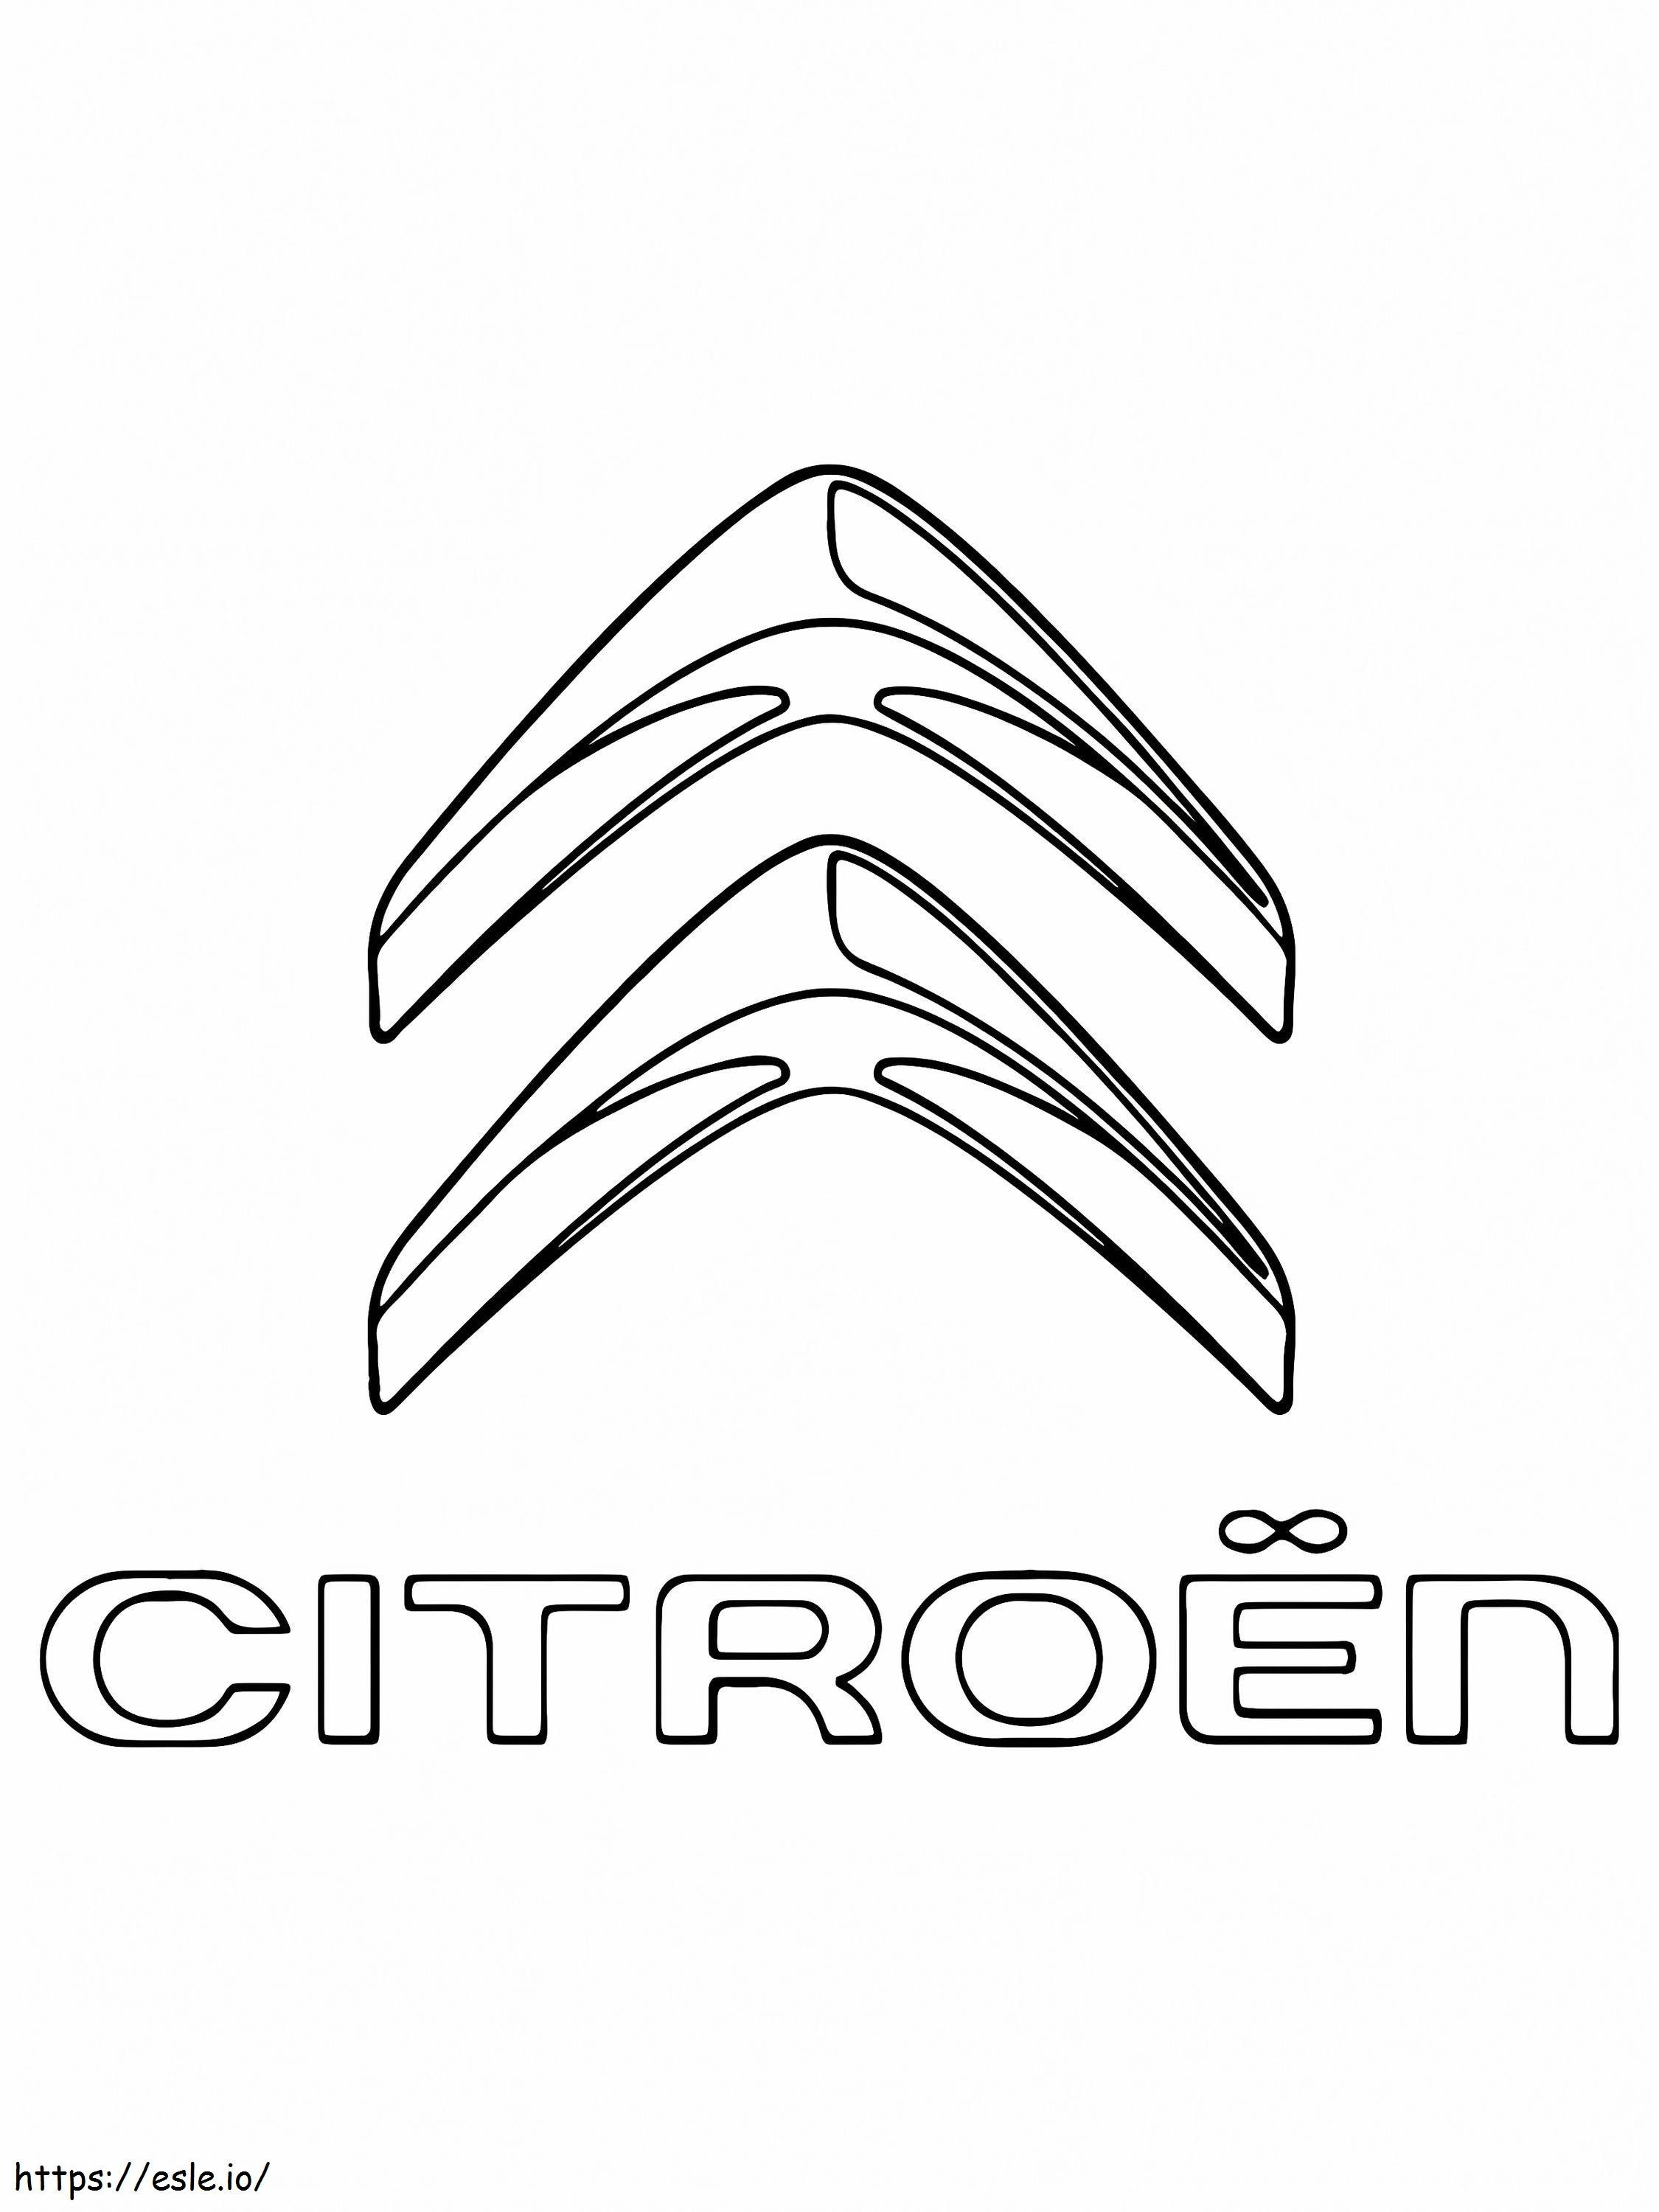 Logotipo Del Coche Citroën para colorear